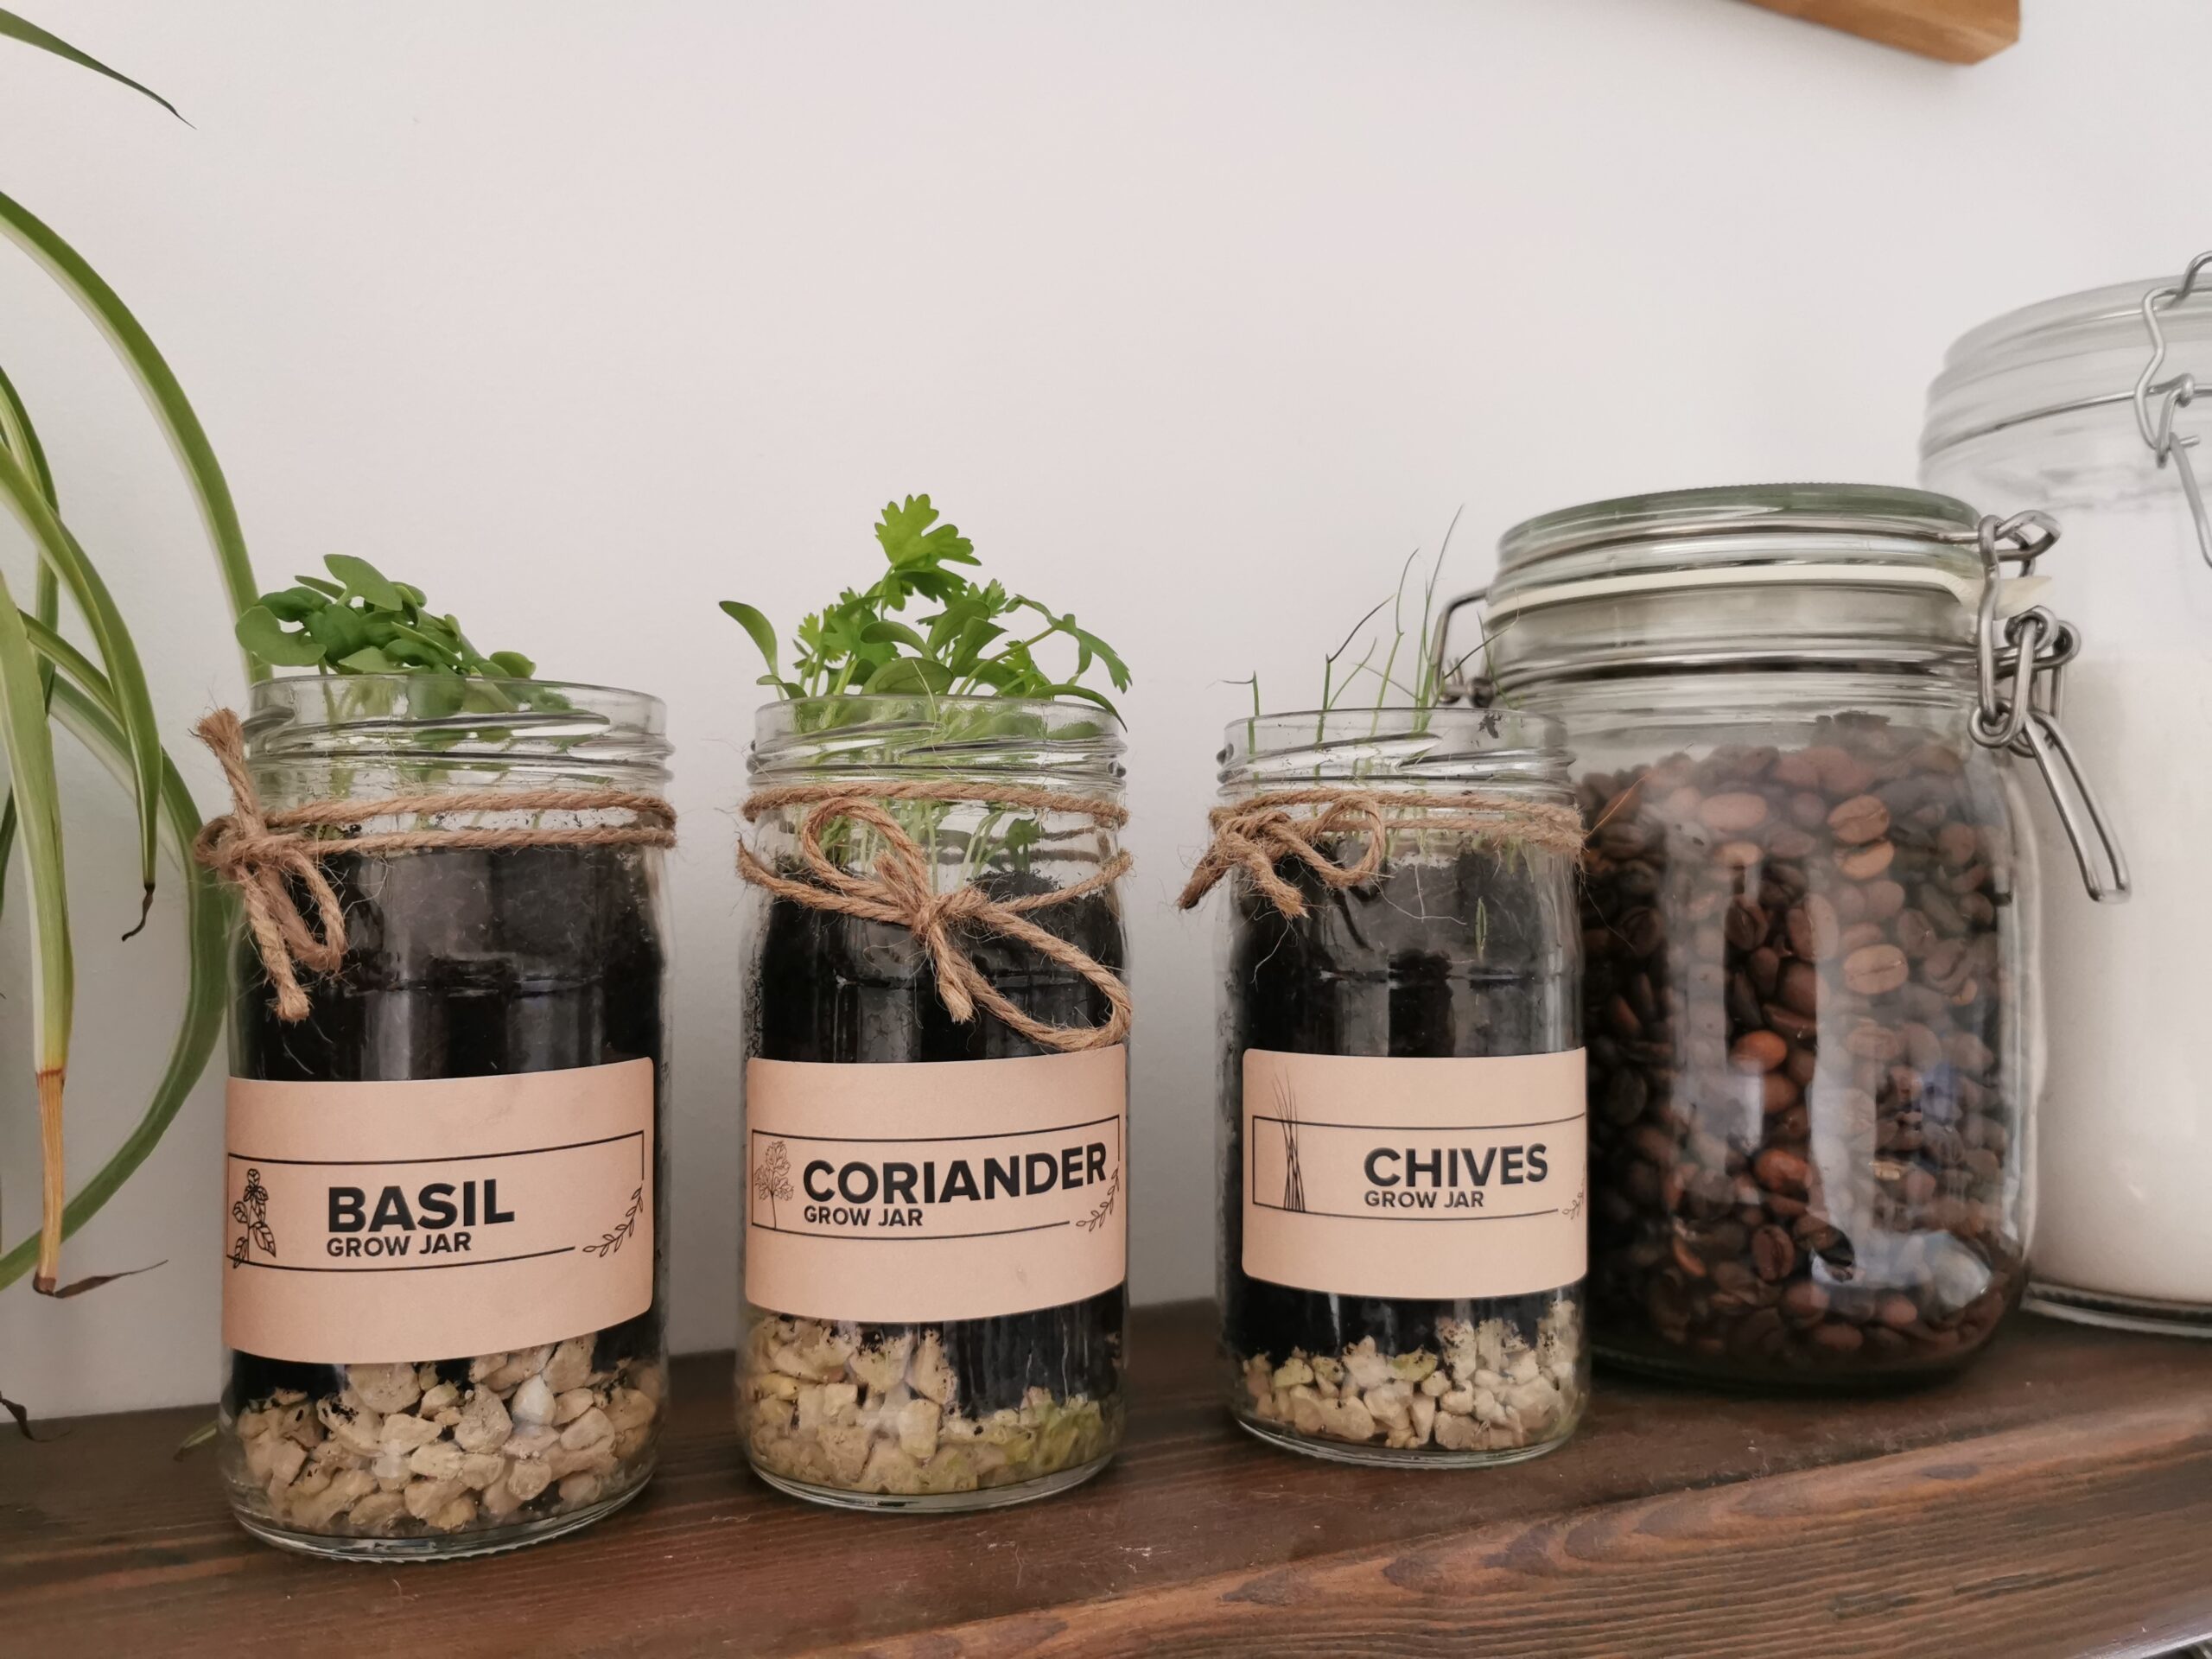 eco friendly gift - herb garden